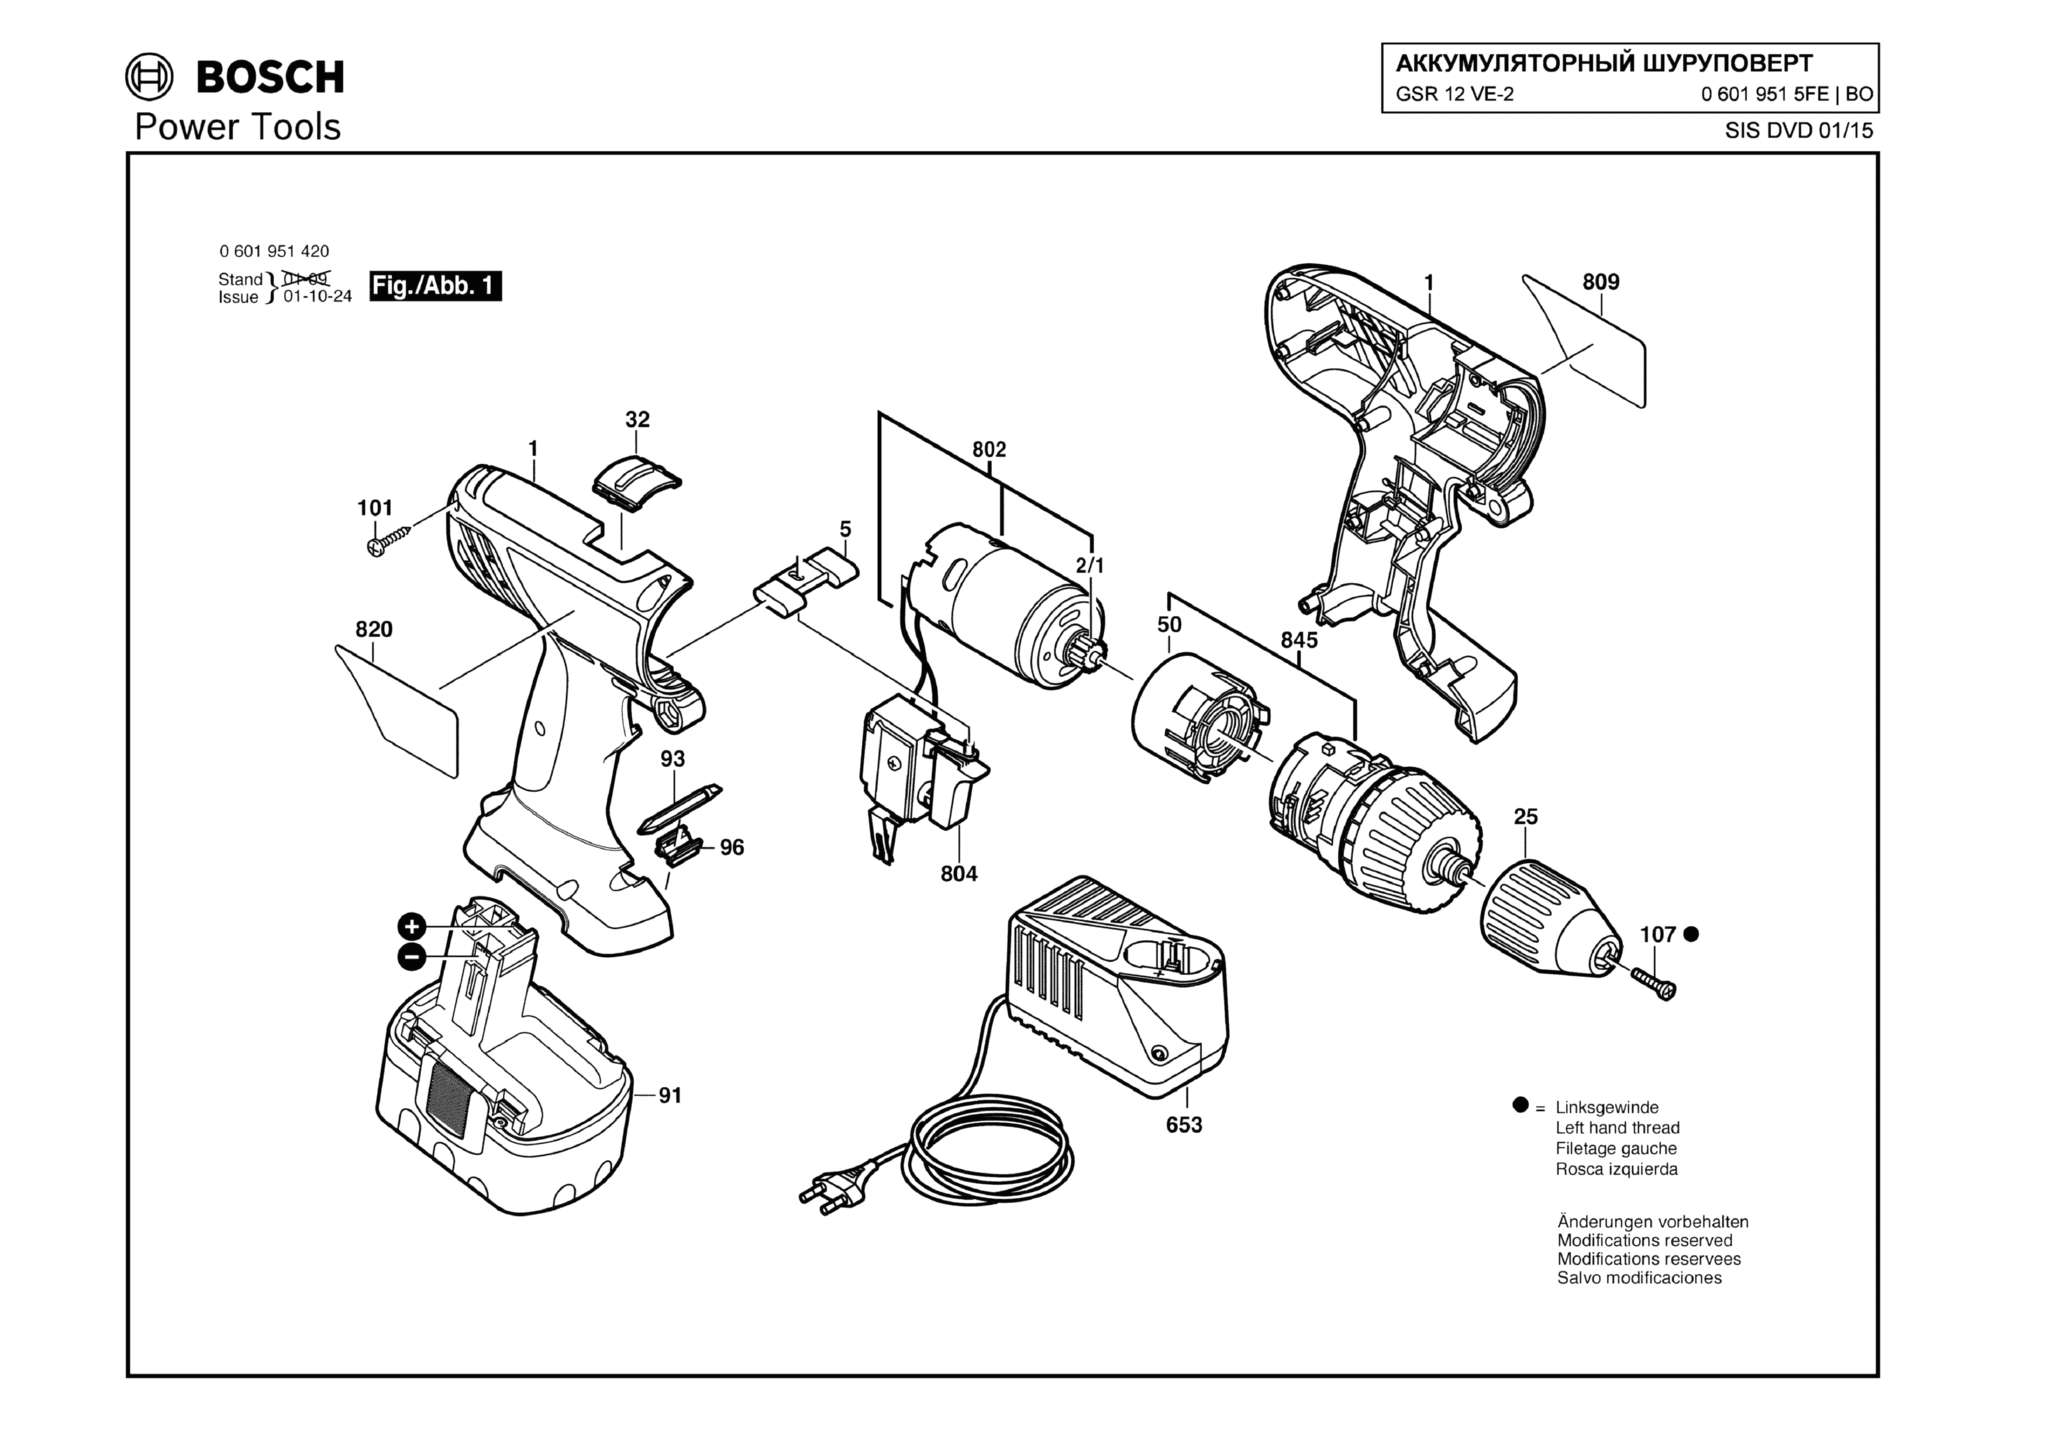 Запчасти, схема и деталировка Bosch GSR 12 VE-2 (ТИП 06019515FE)